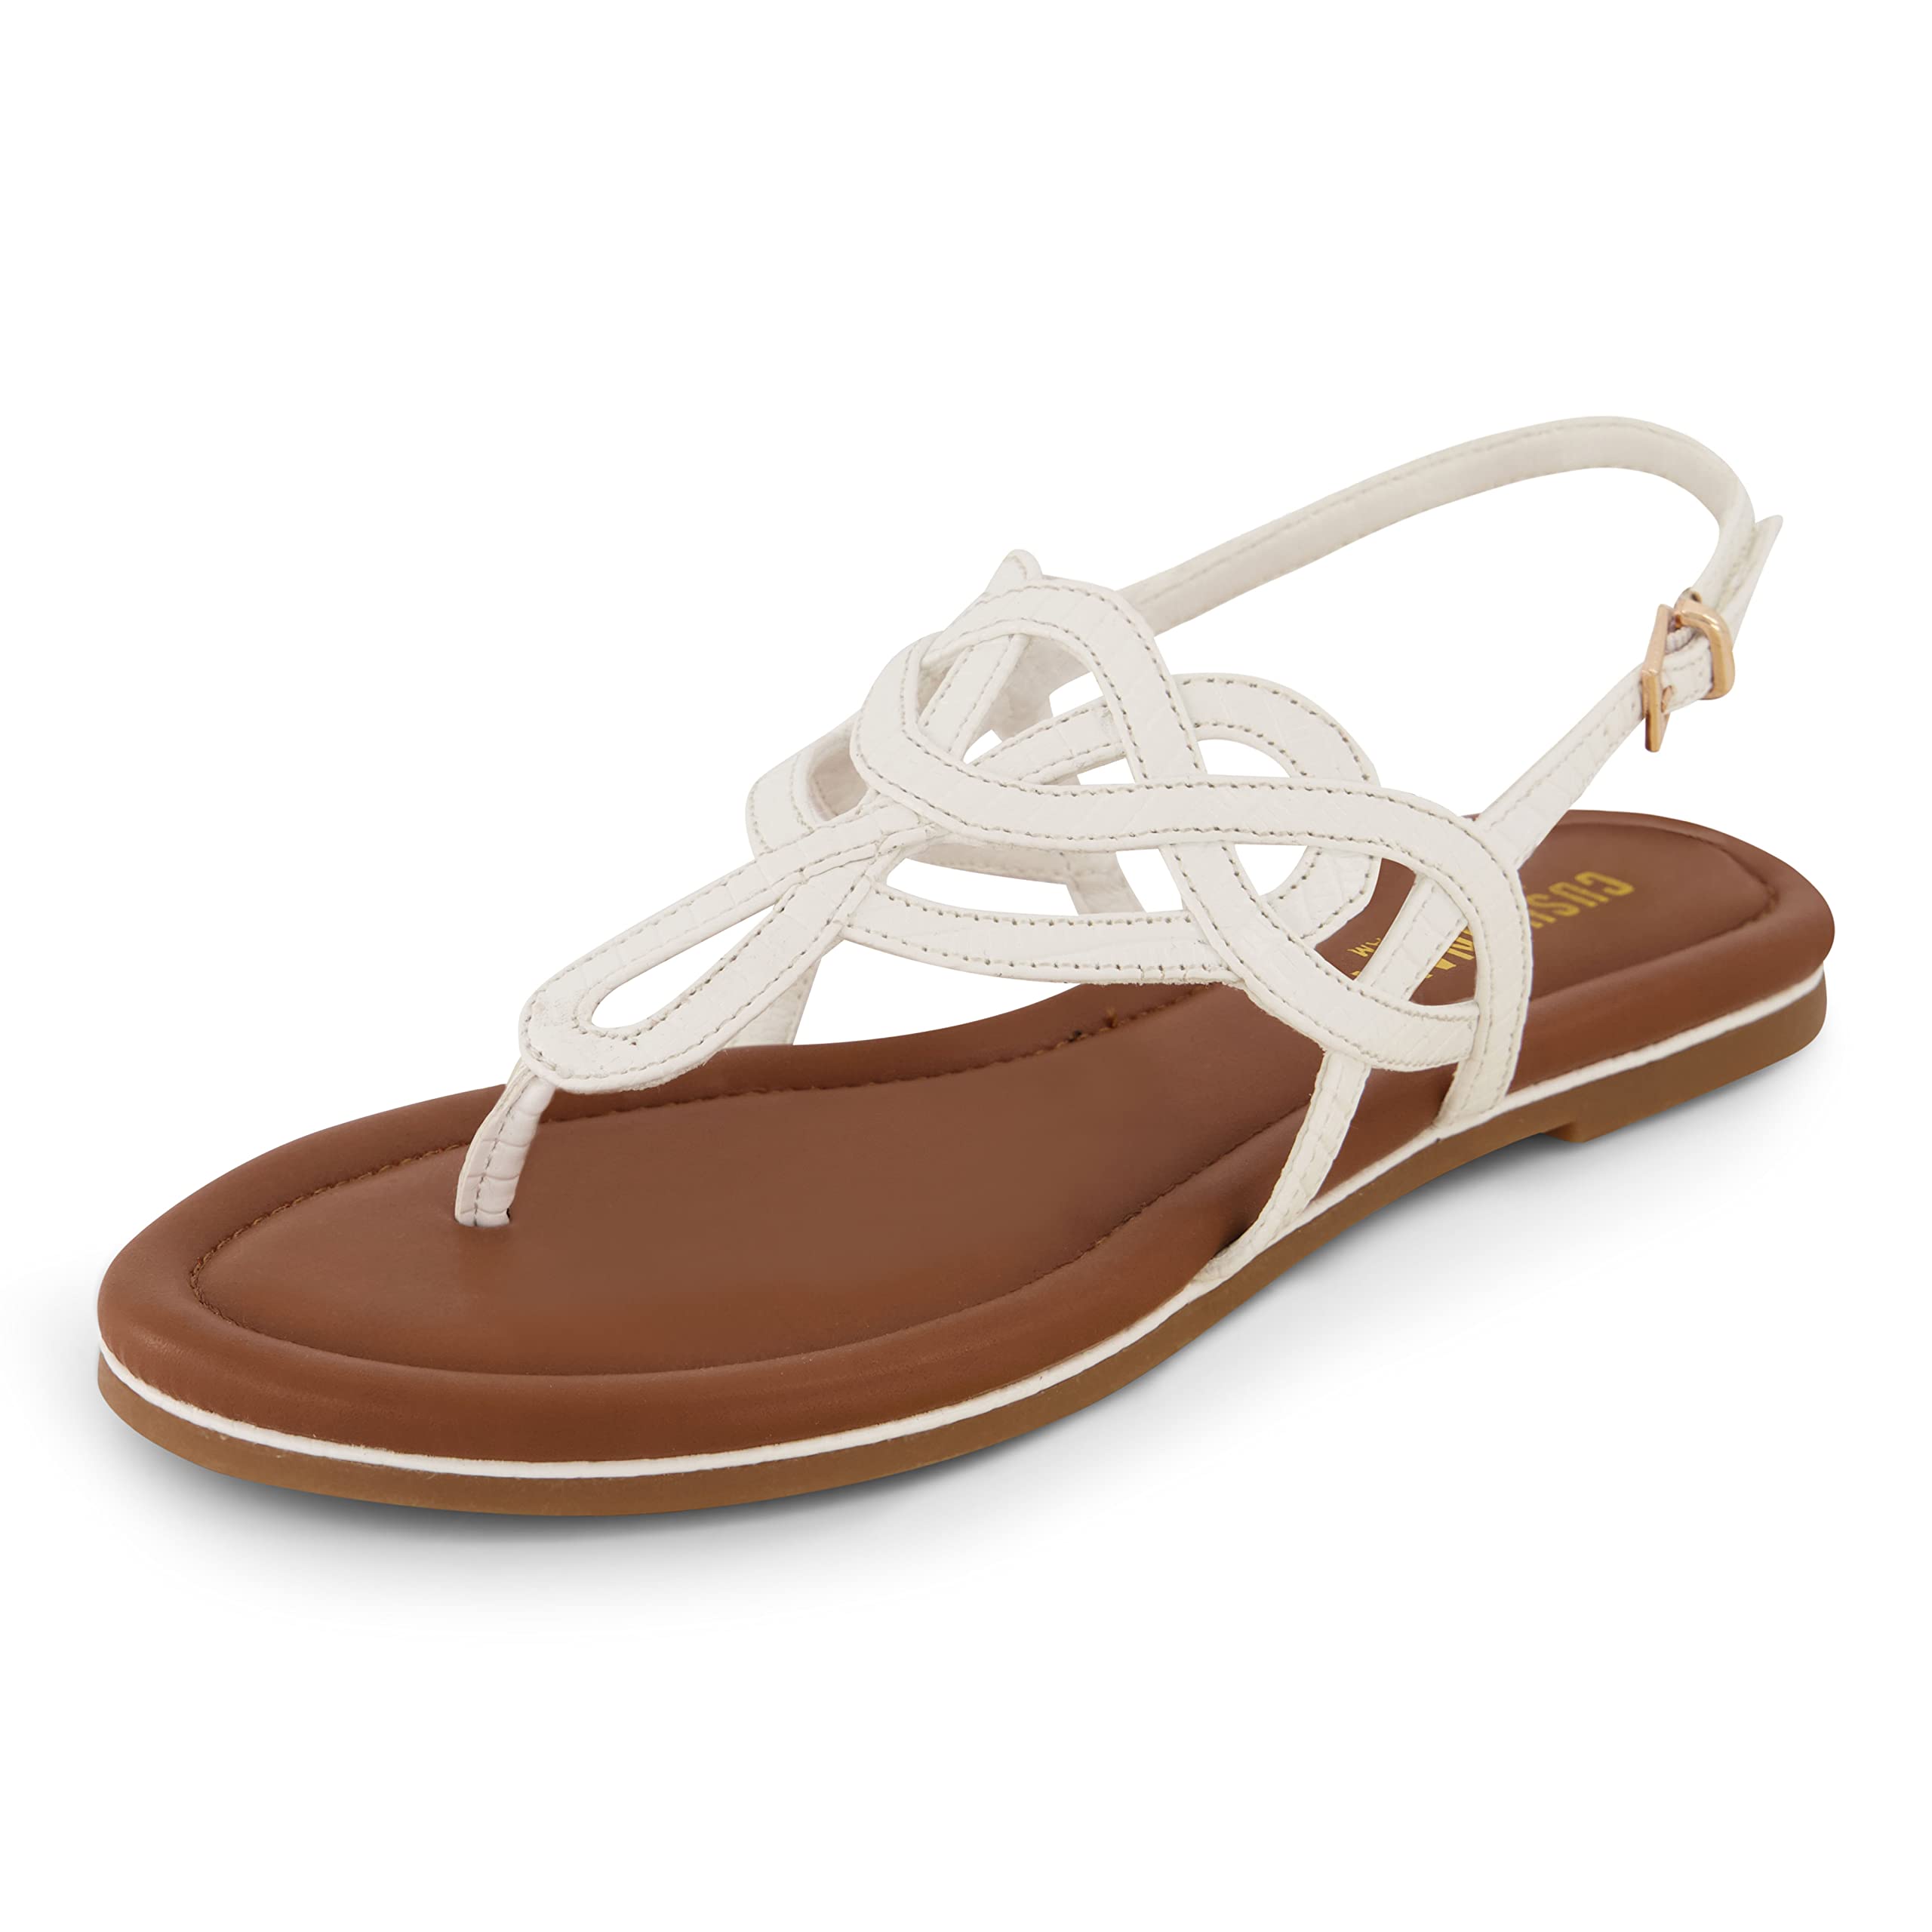 CUSHIONAIRE Women's Judit flat sandal +Comfort Foam, Wide Widths Available